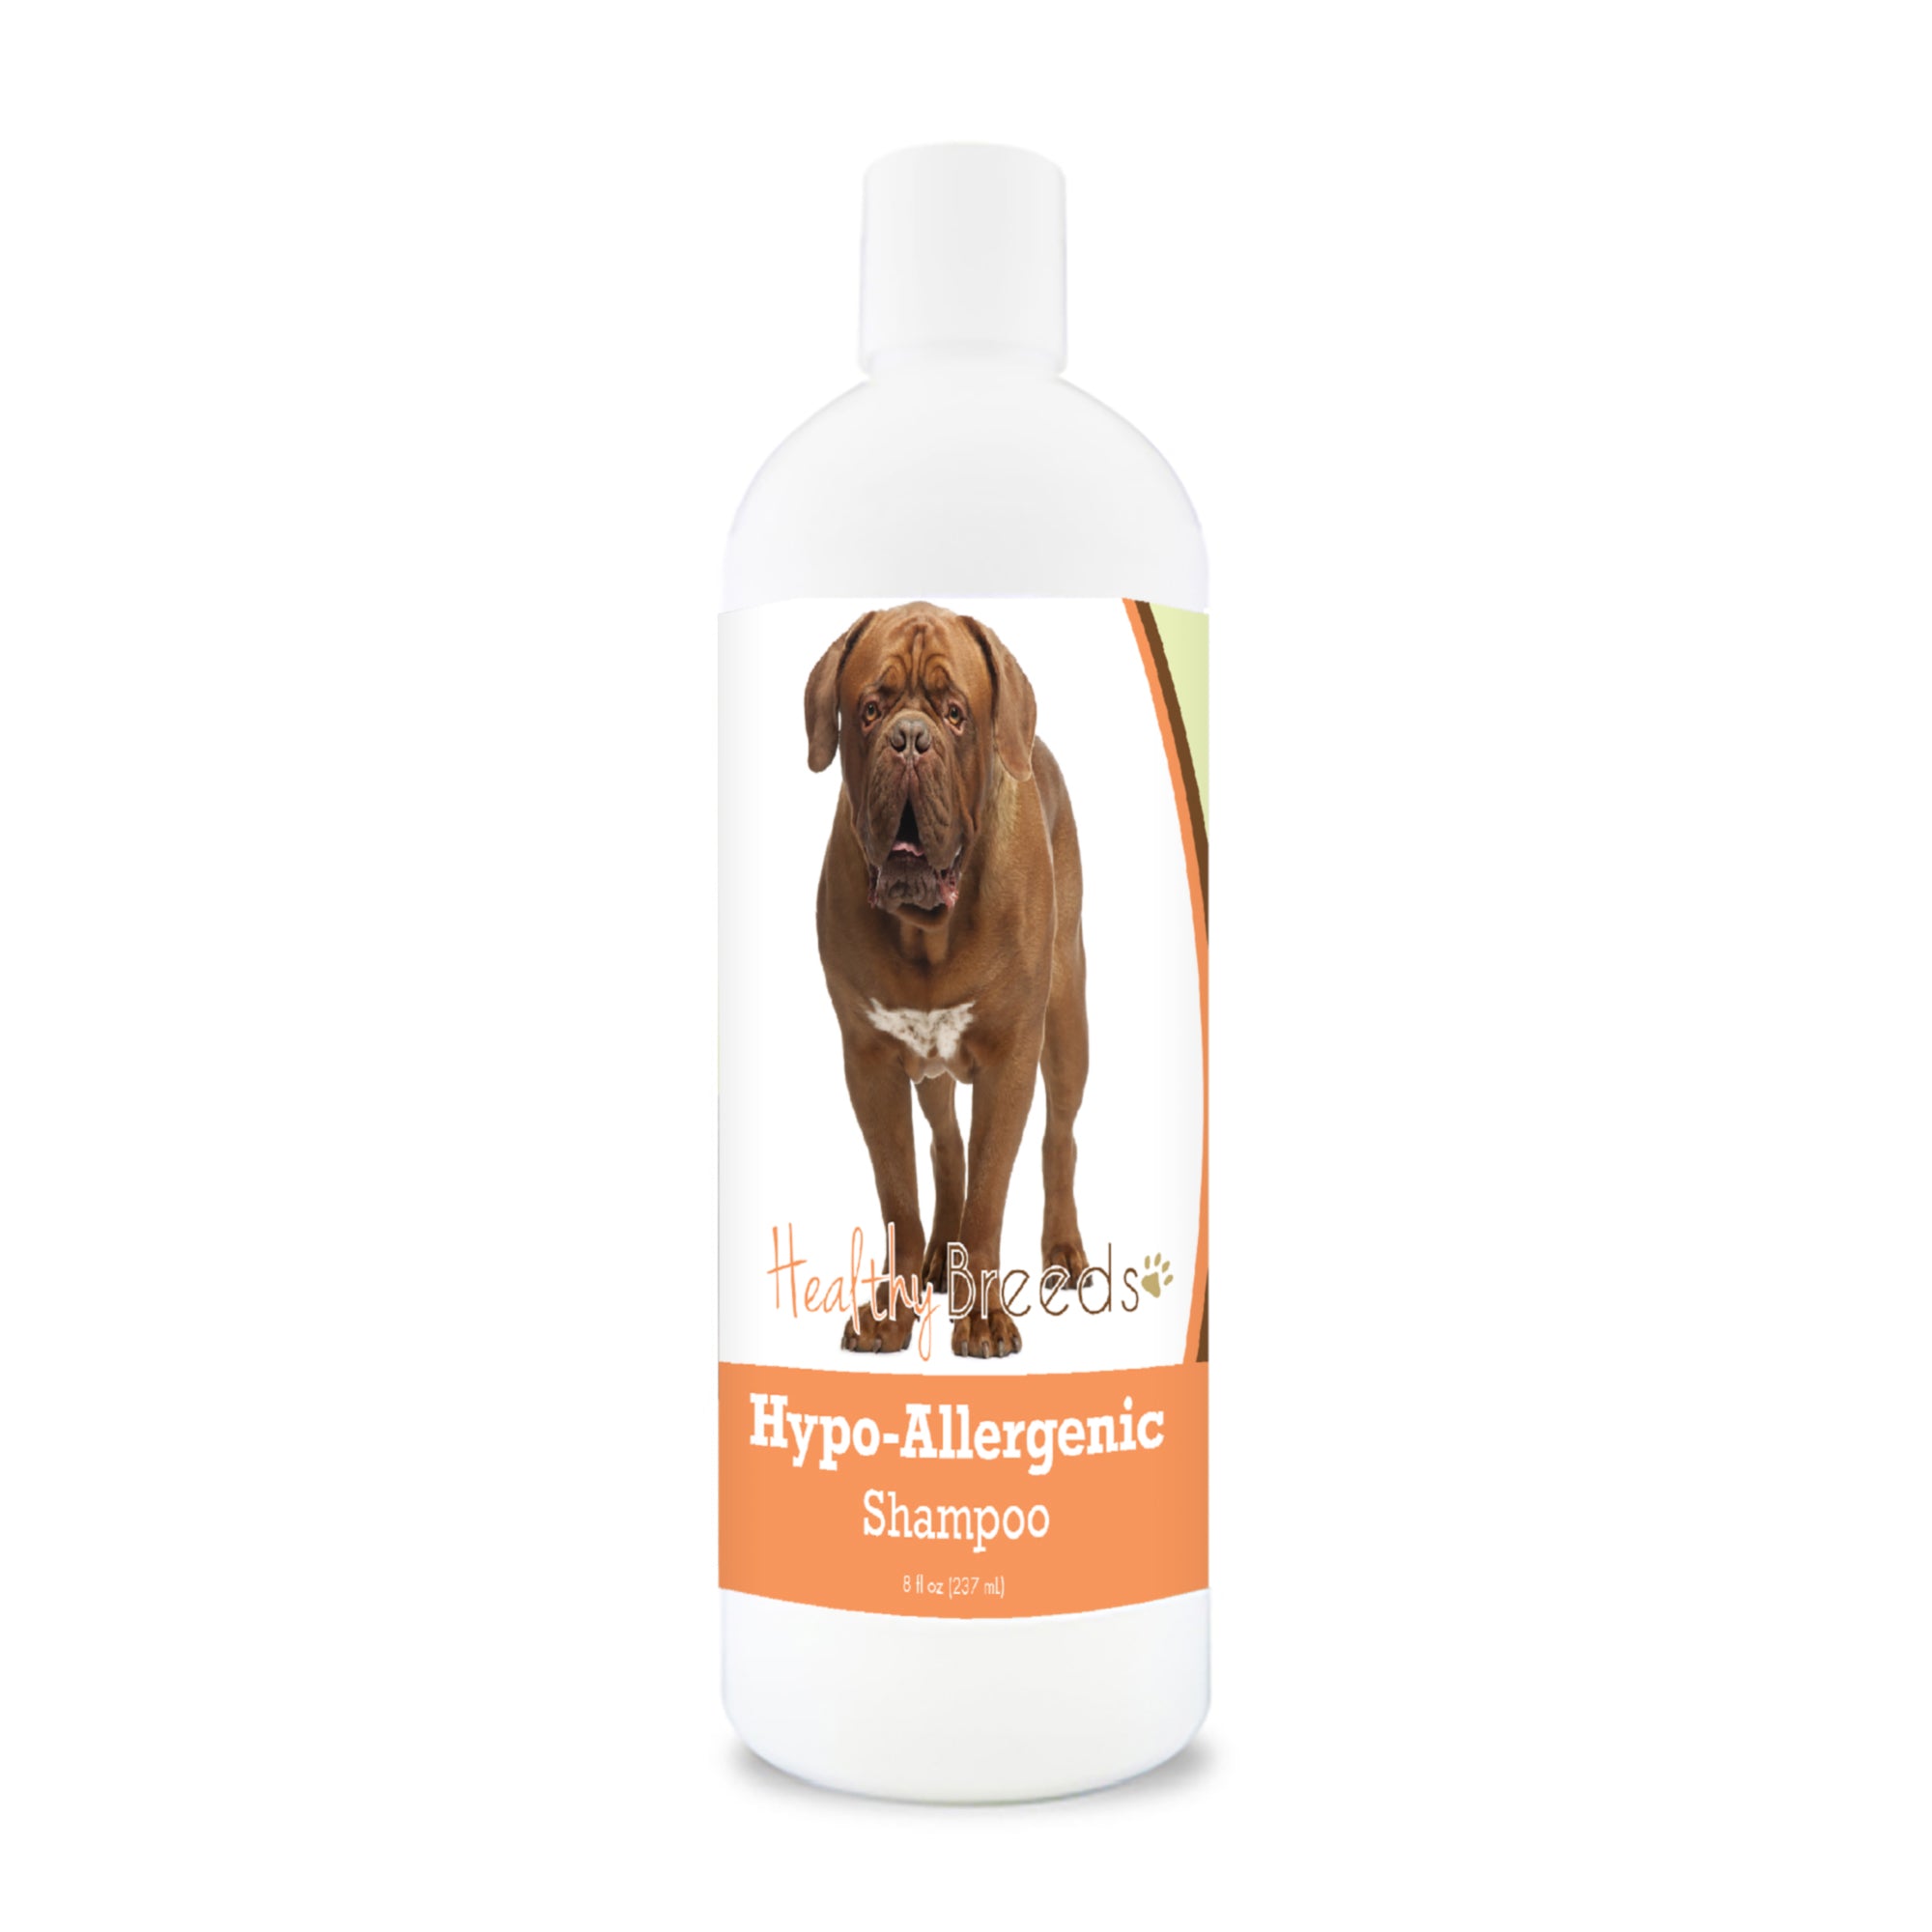 Dogue de Bordeaux Hypo-Allergenic Shampoo 8 oz